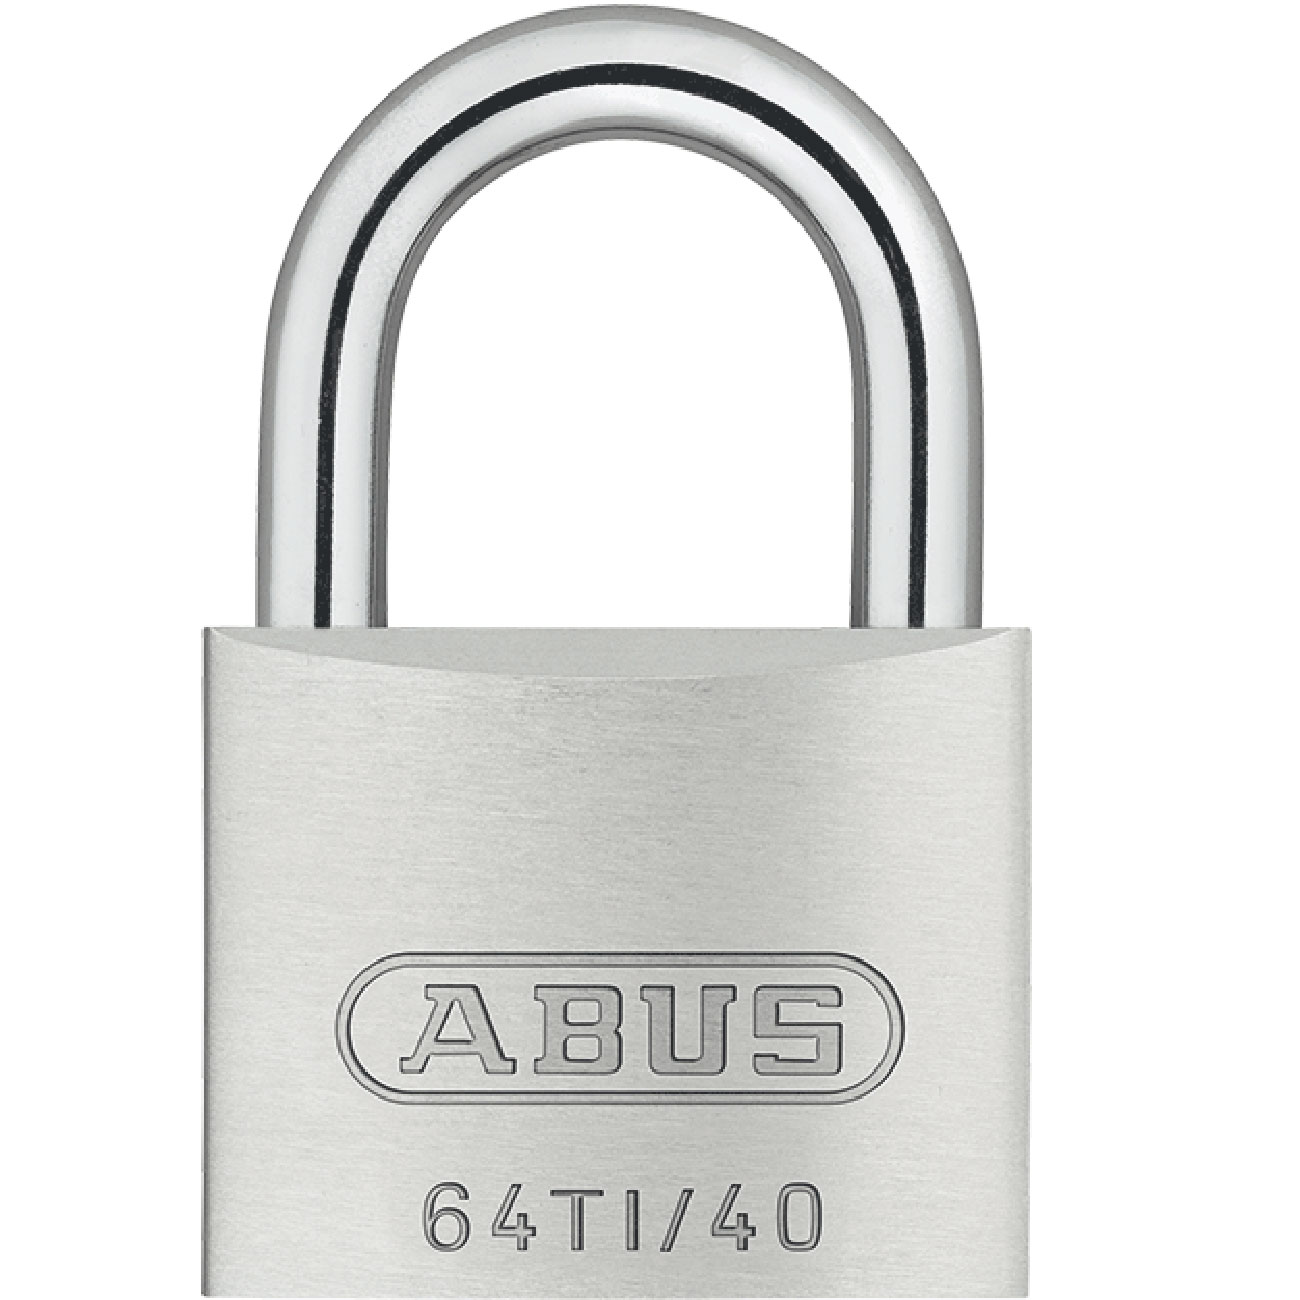 ABUS Security-Center ABUS Titalium 64TI/40 - Vorhängeschloss - Schlüssel